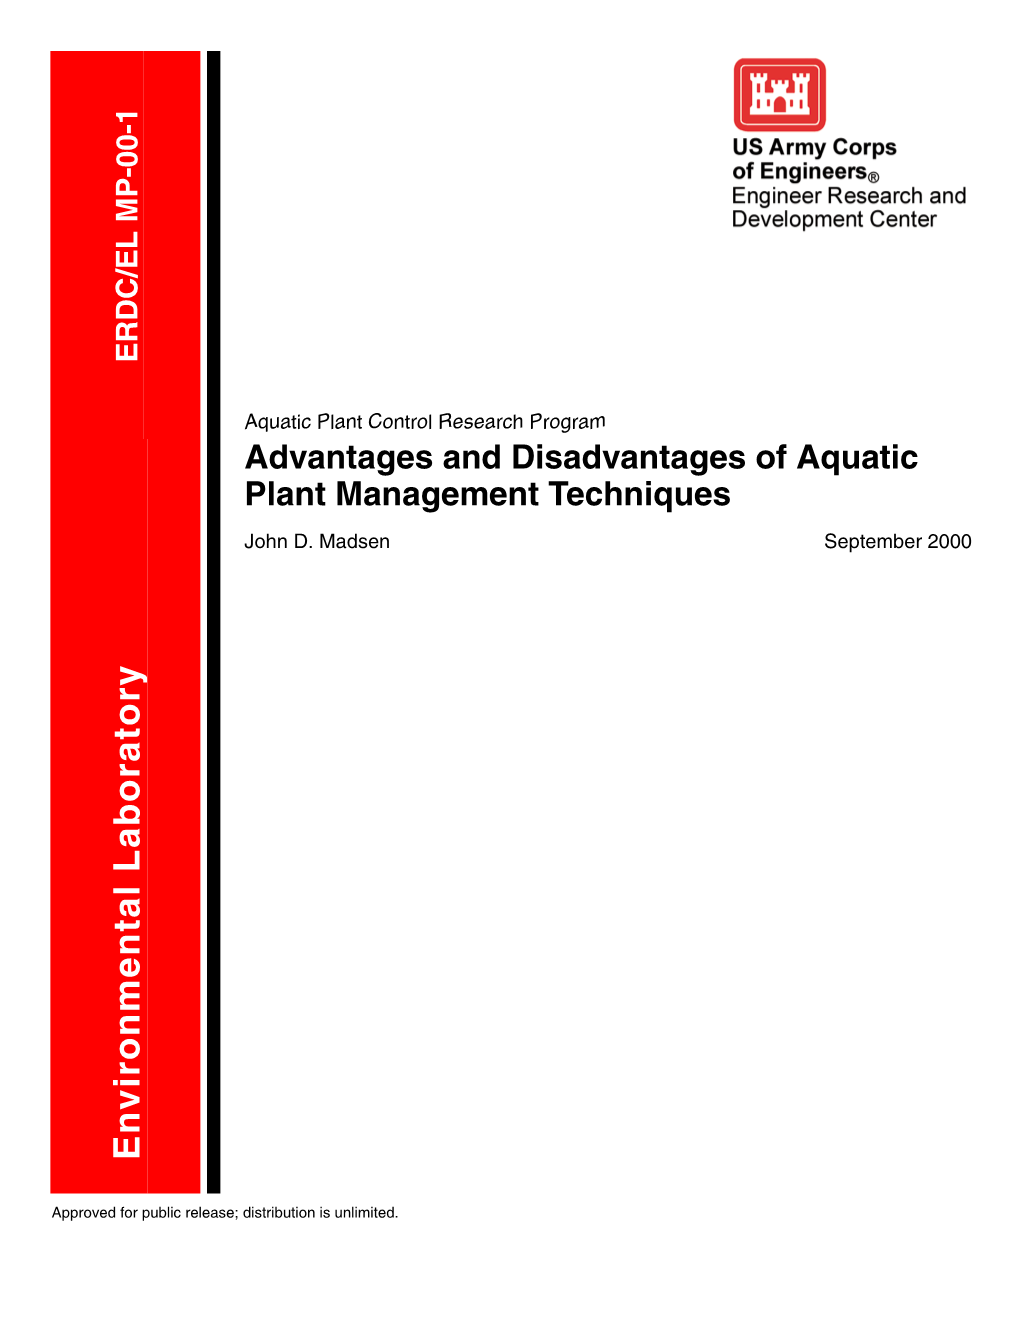 Advantages and Disadvantages of Aquatic Plant Management Techniques by John D